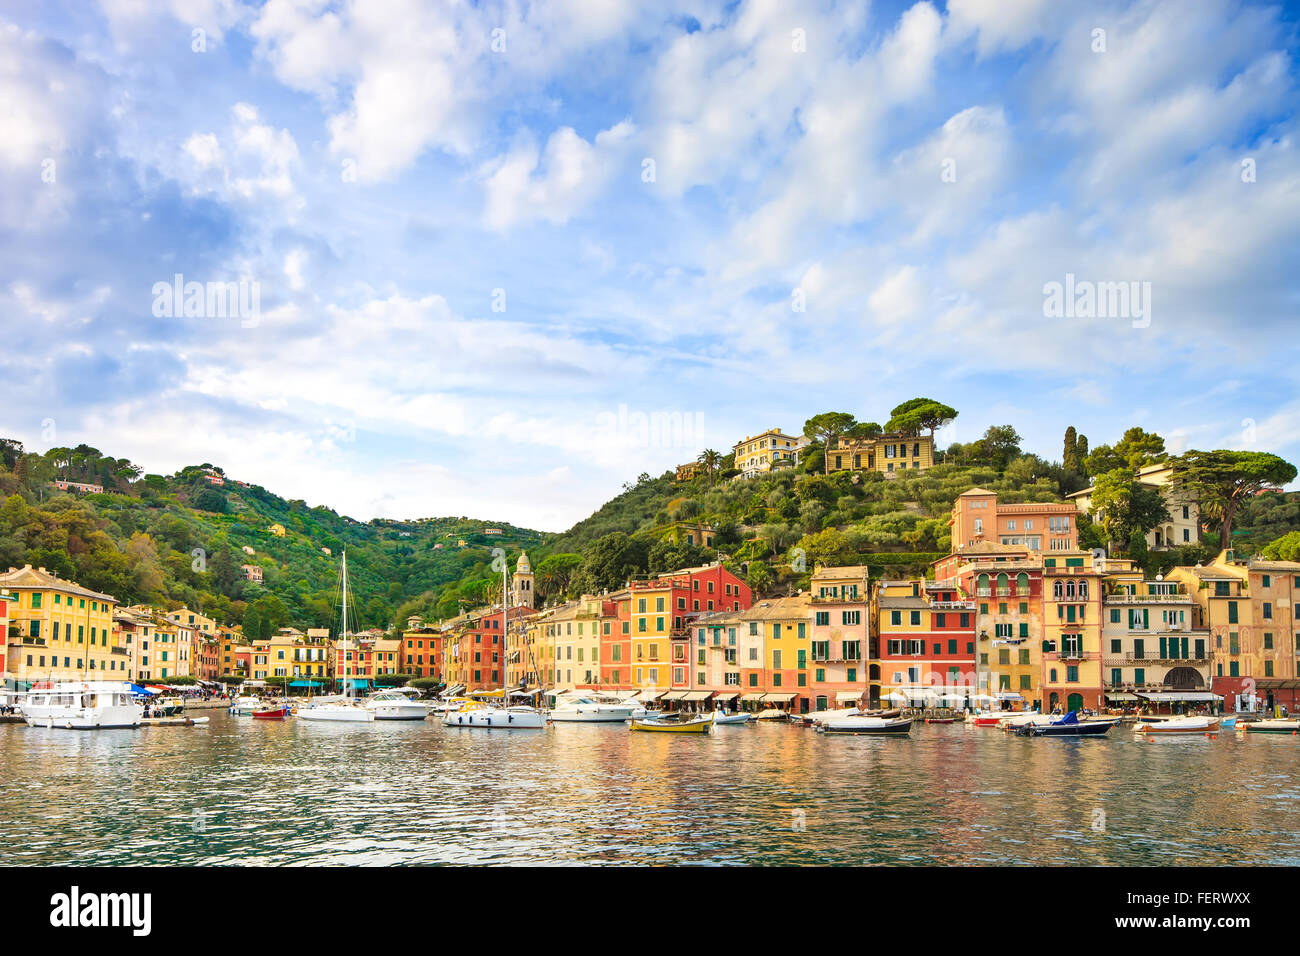 Portofino luxury landmark panorama. Village and yacht in little bay harbor. Liguria, Italy Stock Photo